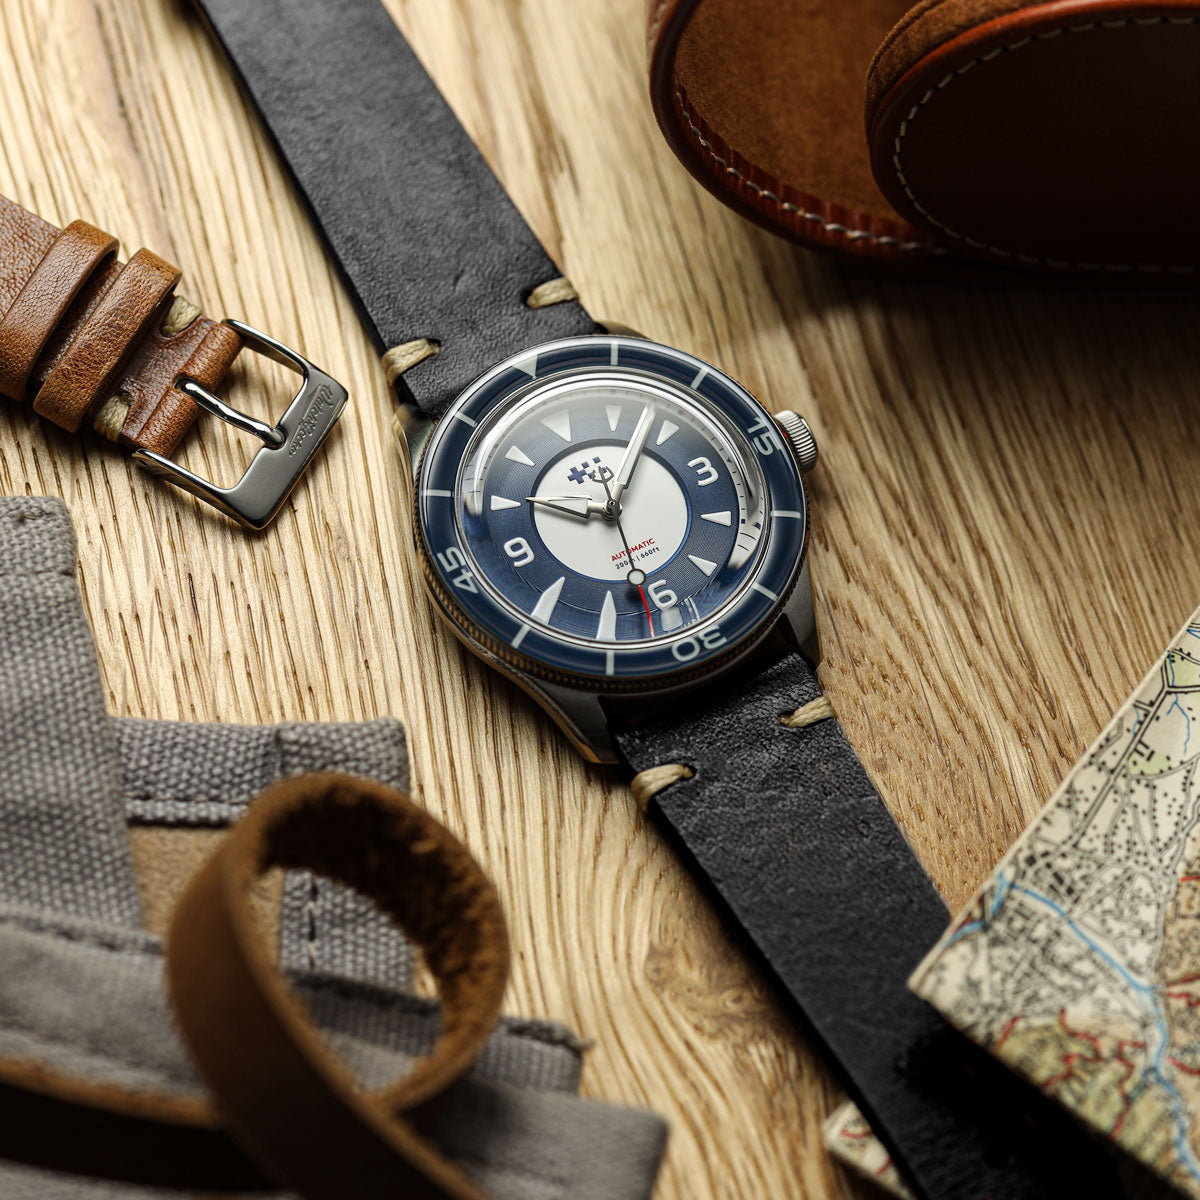 Classic Simple Handmade Italian Leather Watch Strap - Black